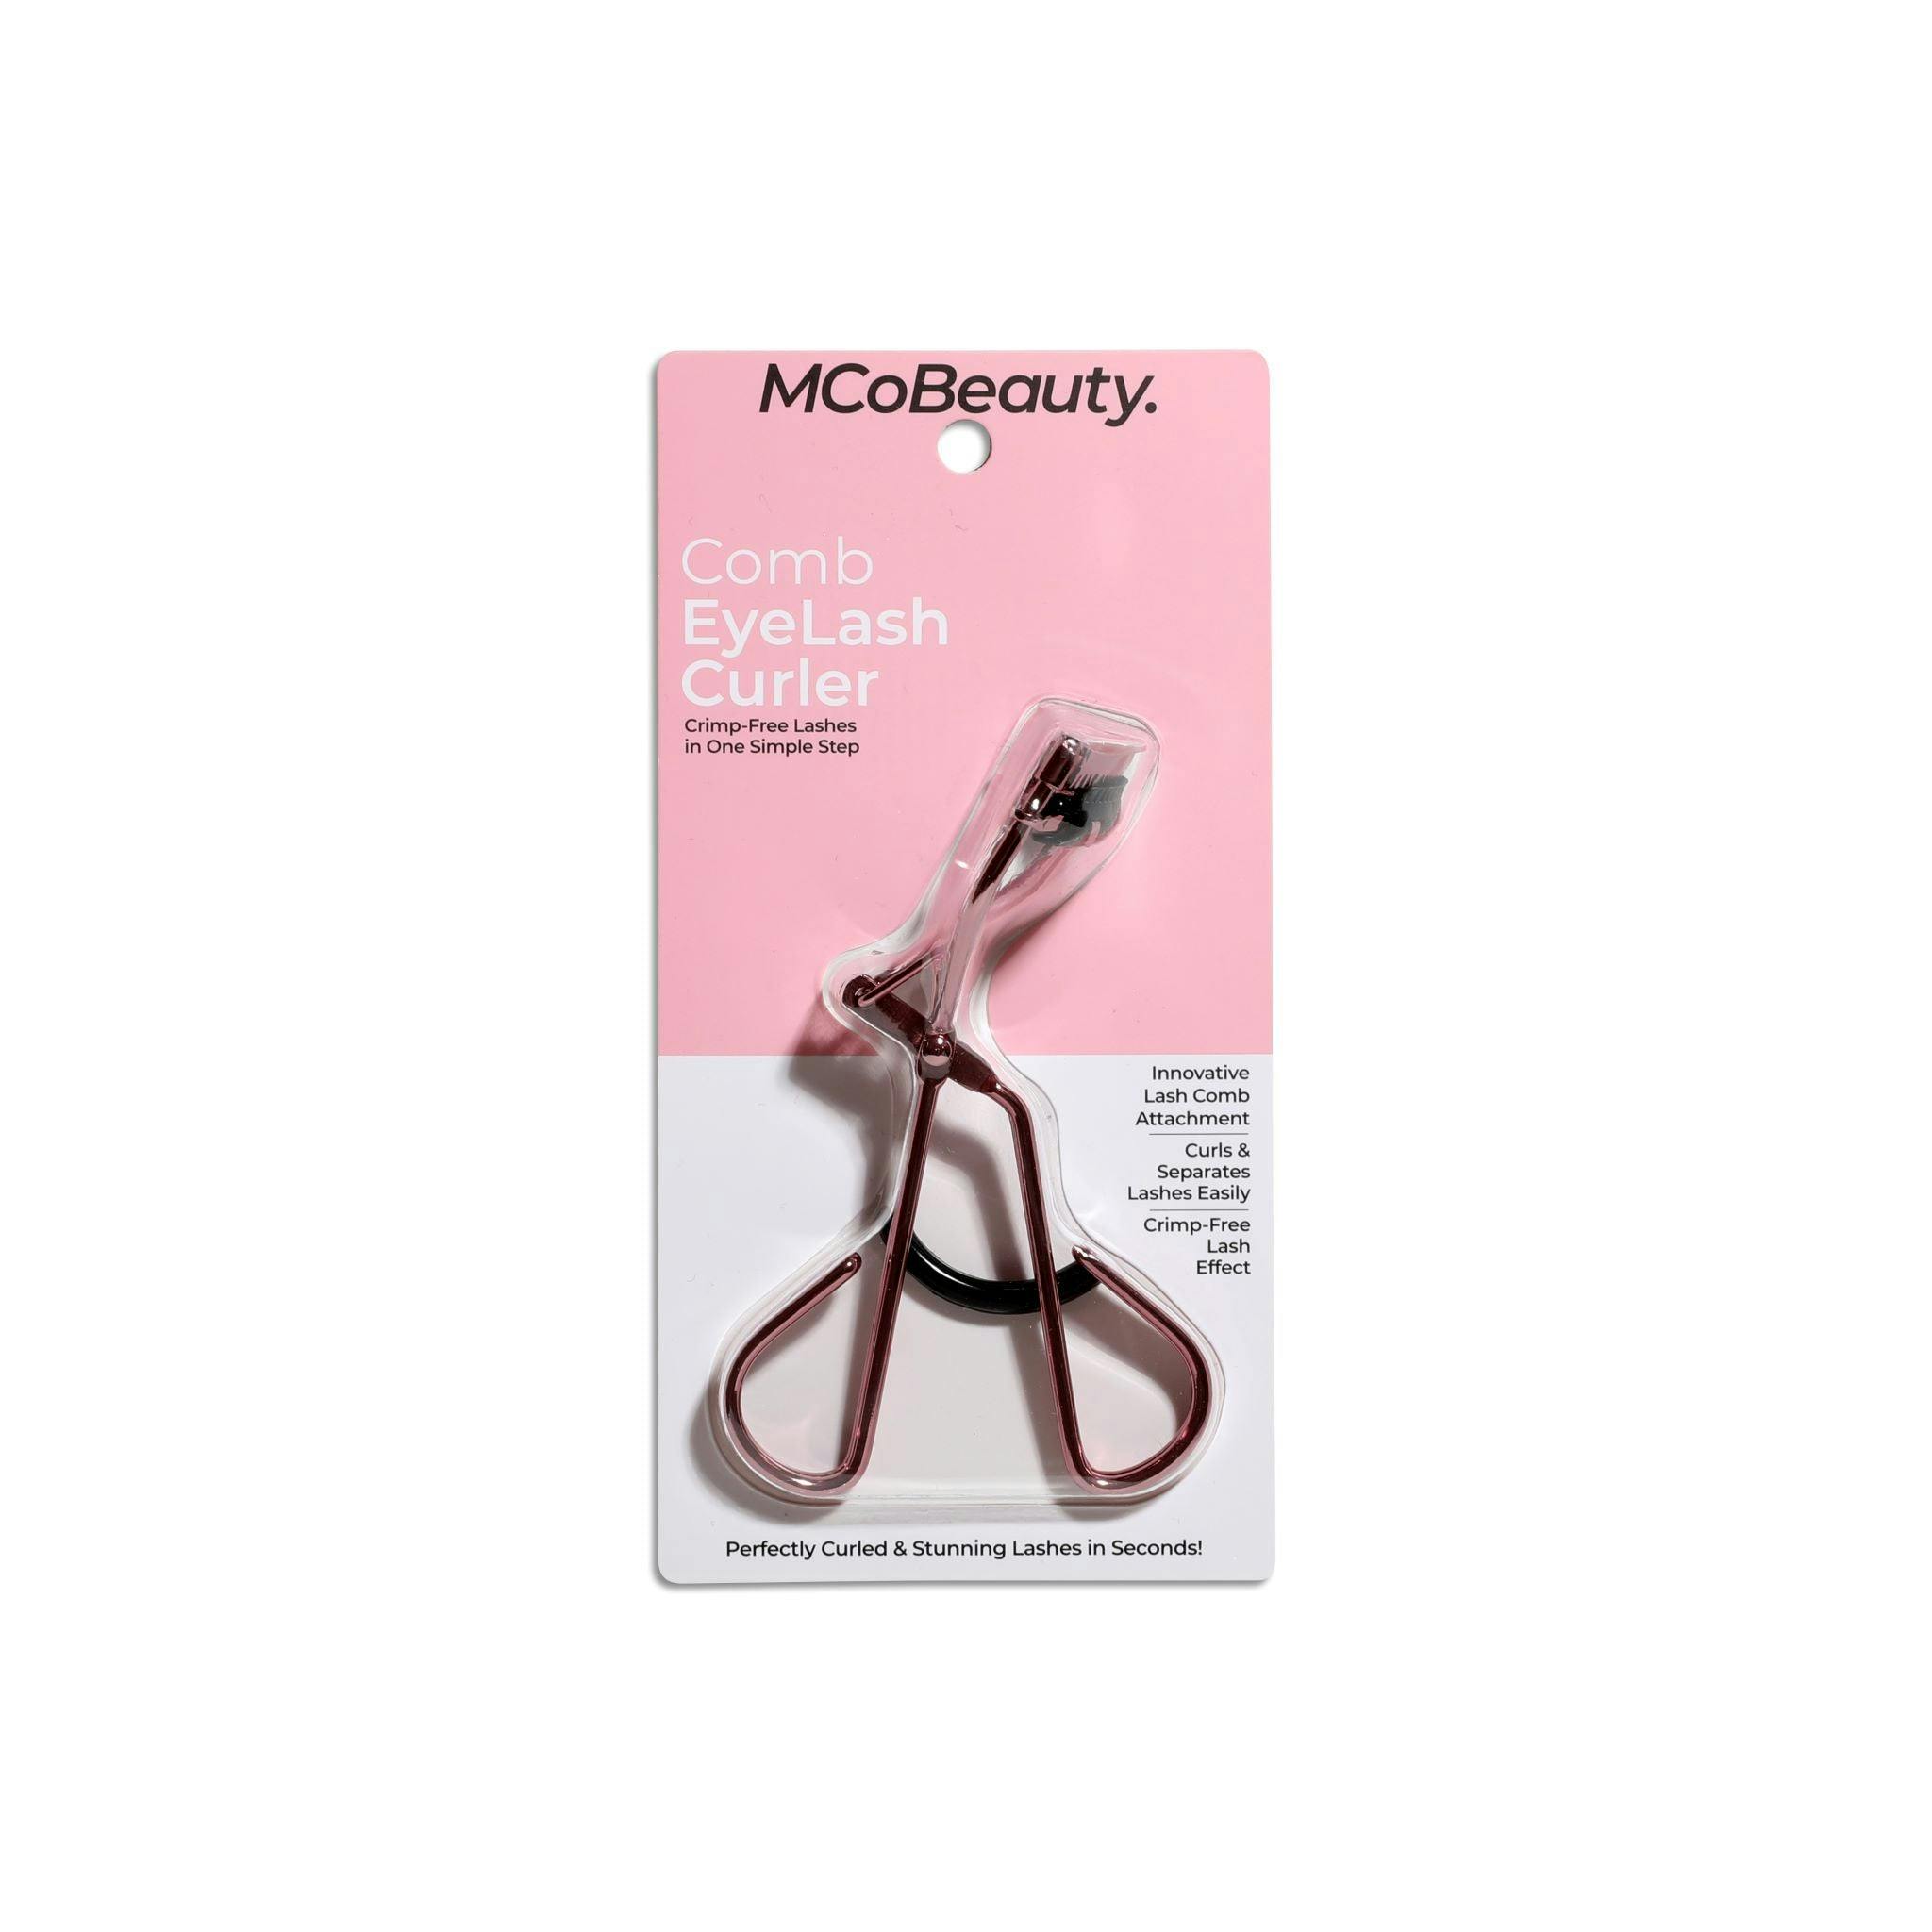 Mcobeauty Comb Eyelash Curler